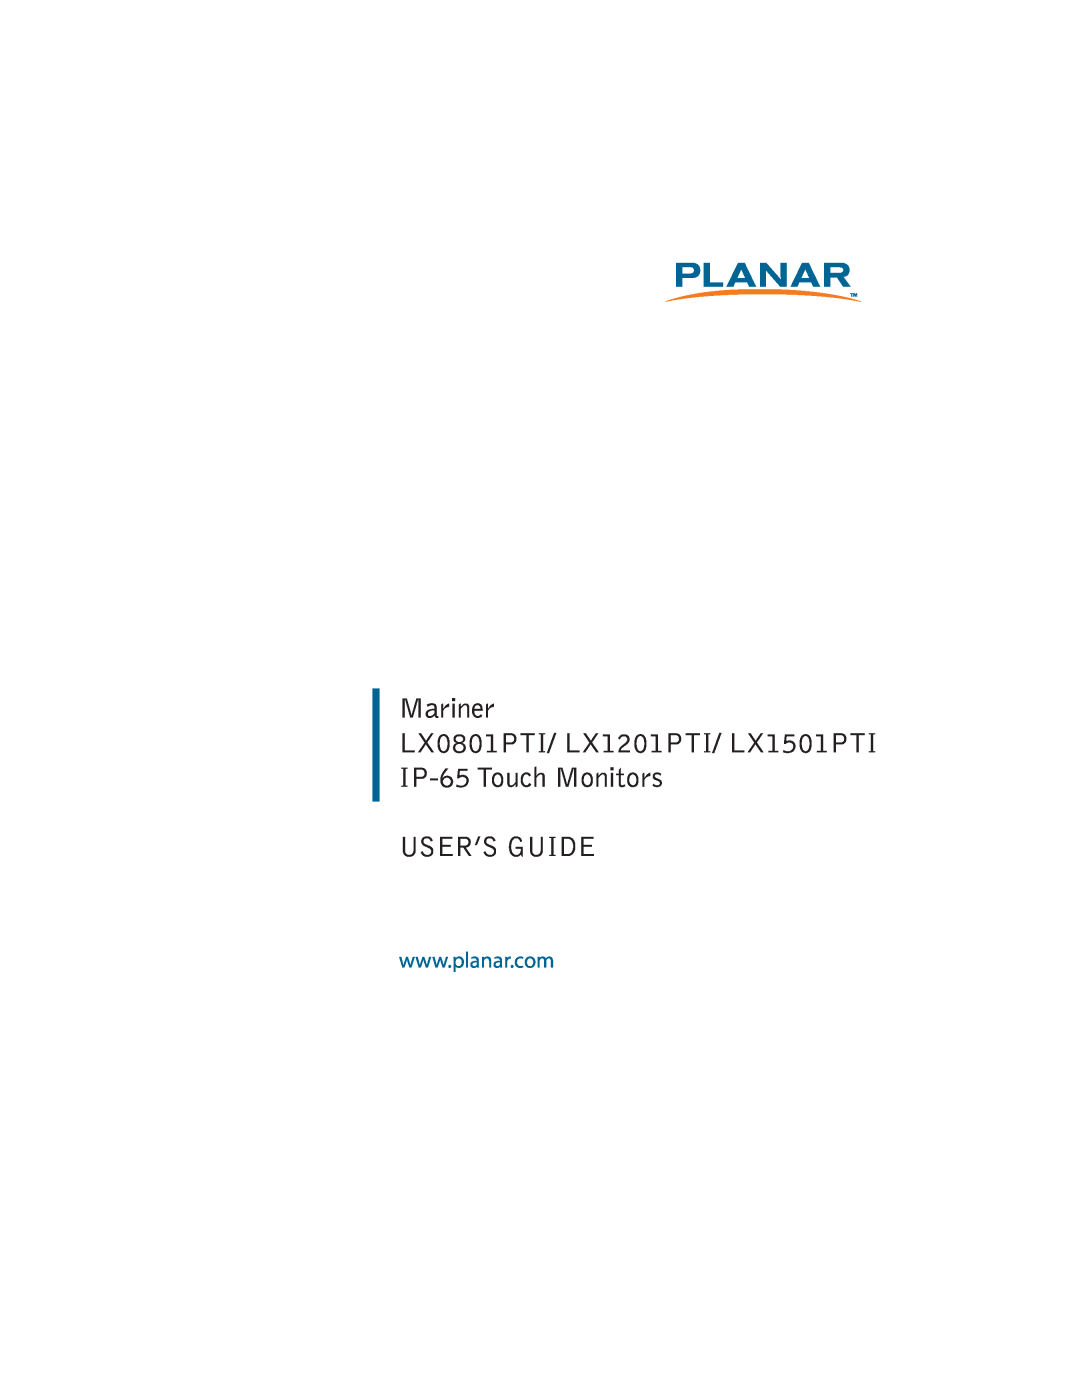 Planar manual Mariner LX0801PTI/ LX1201PTI/ LX1501PTI IP-65 Touch Monitors, User’S Guide 